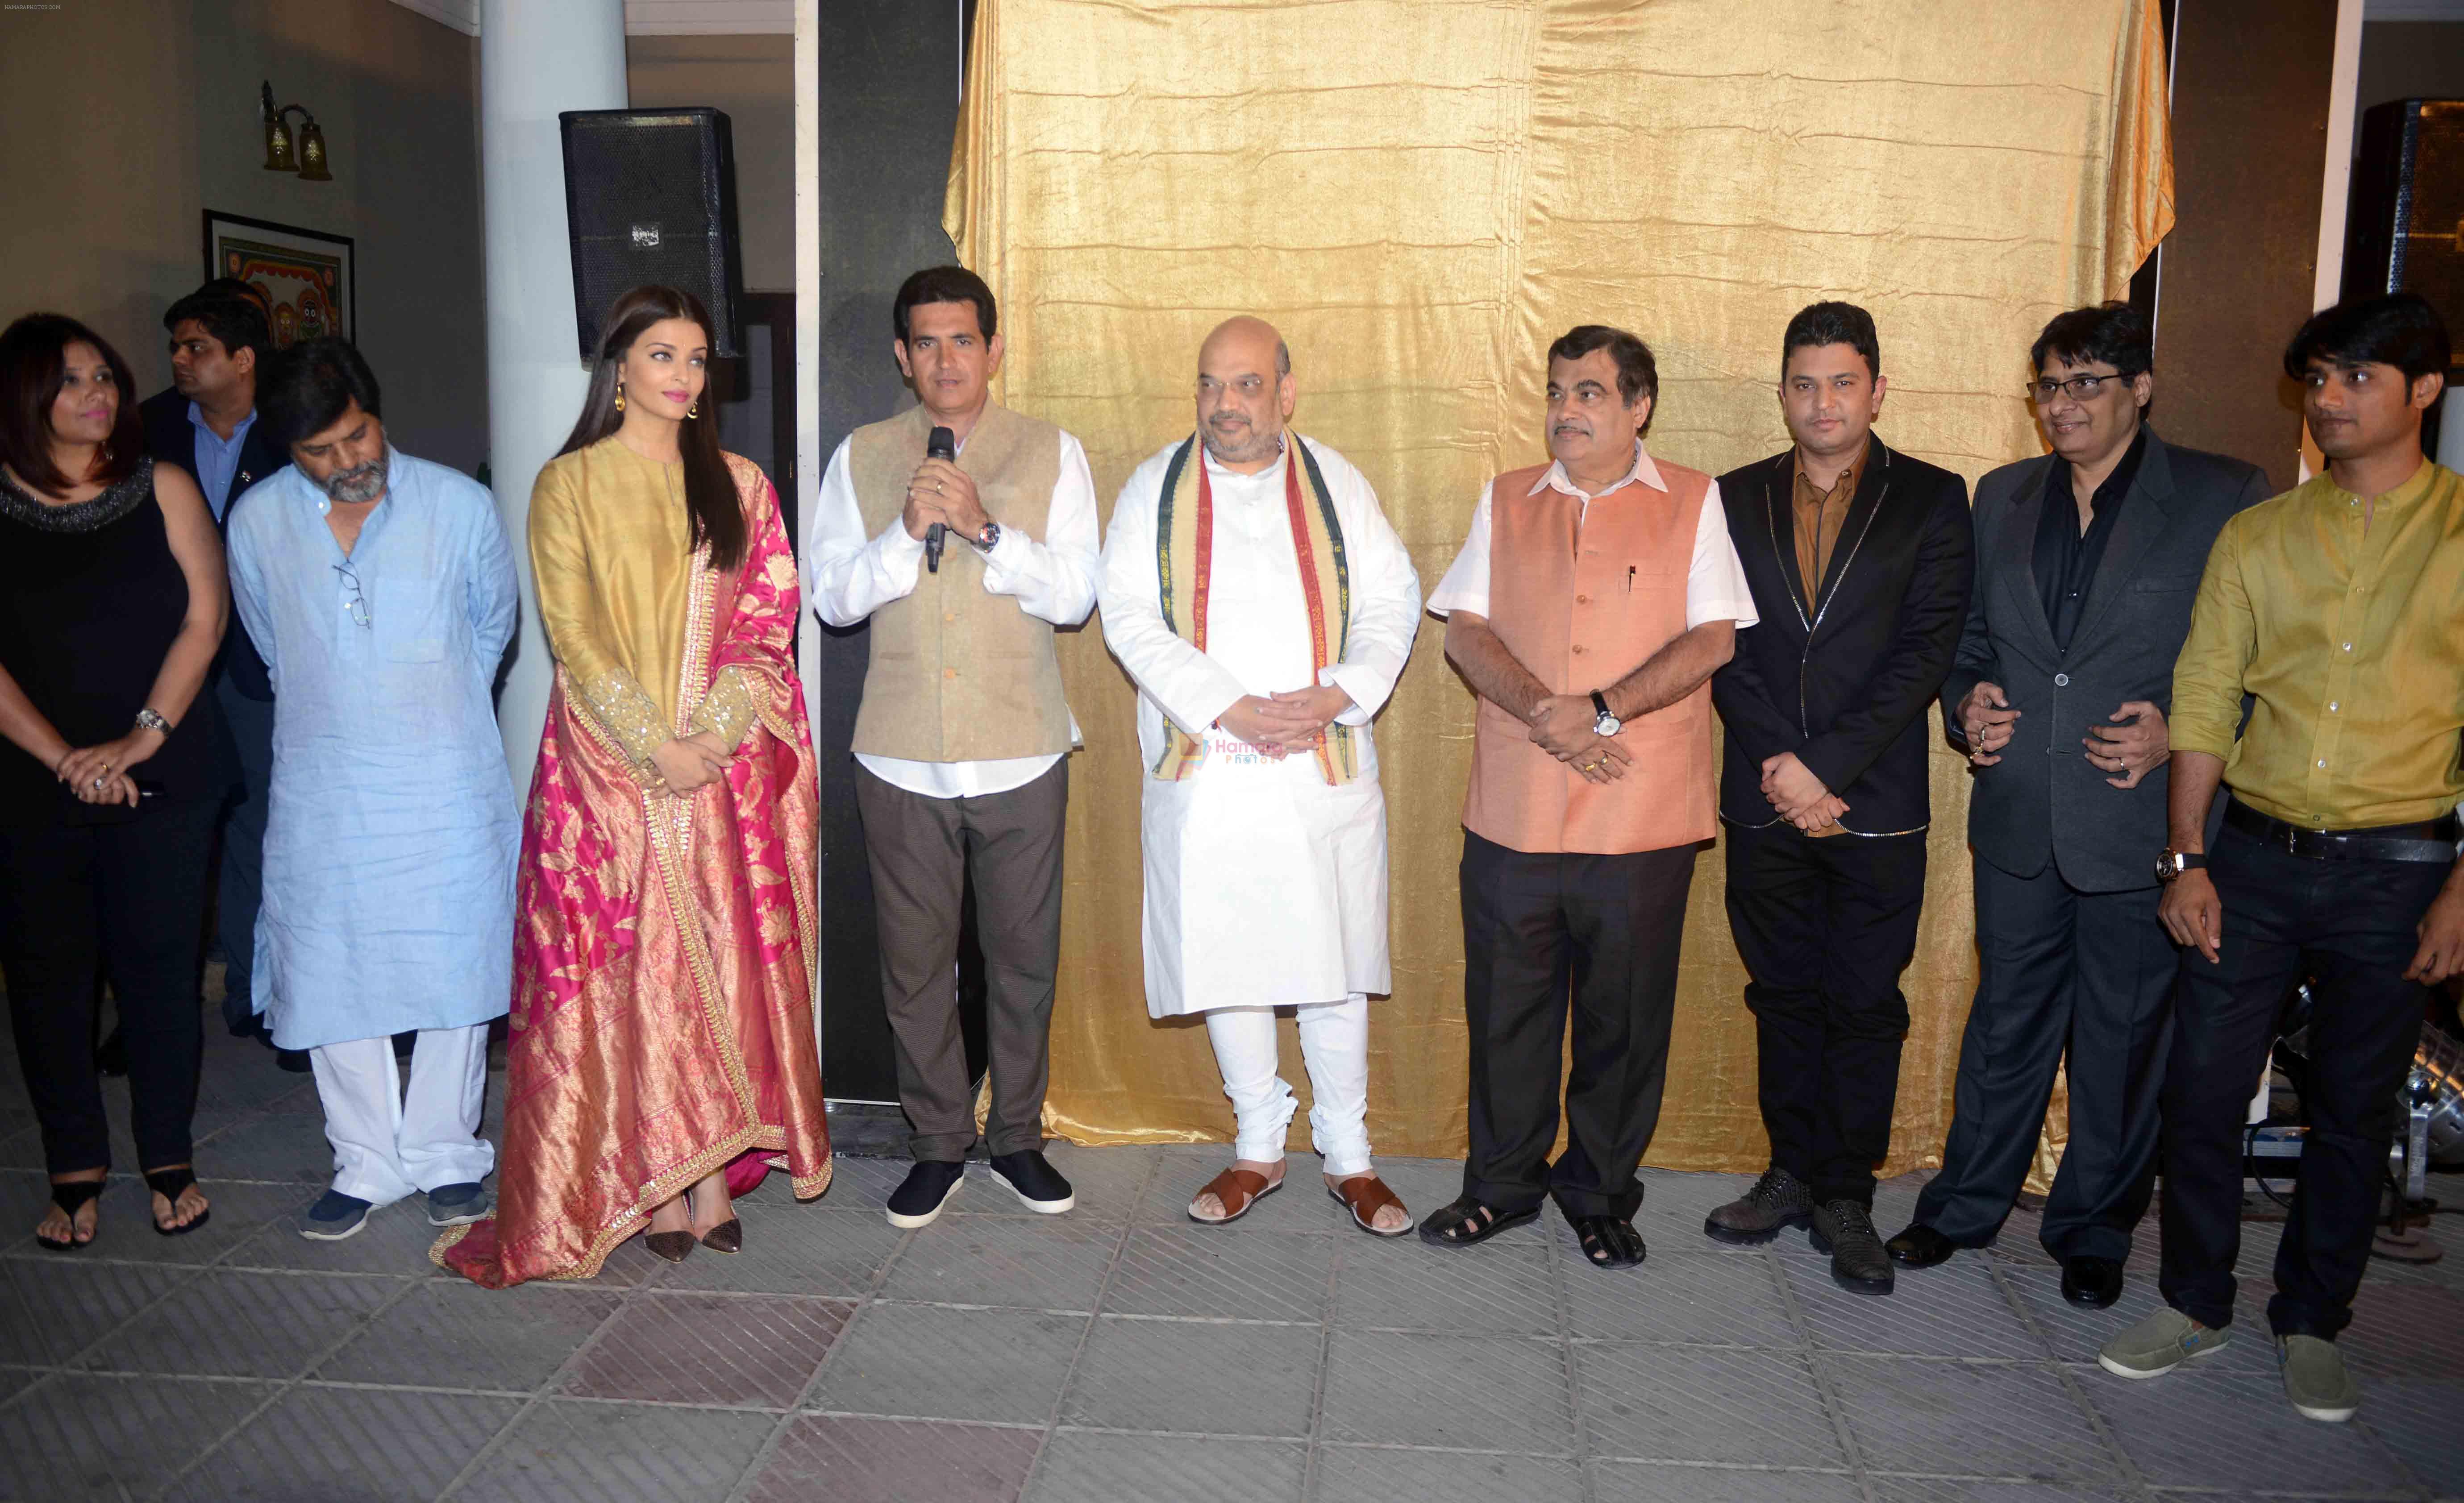 Aishwarya Rai Bachchan, Omung Kumar, Amit Shah at the first look launch of Sarbjit in Delhi on 29th Feb 2016